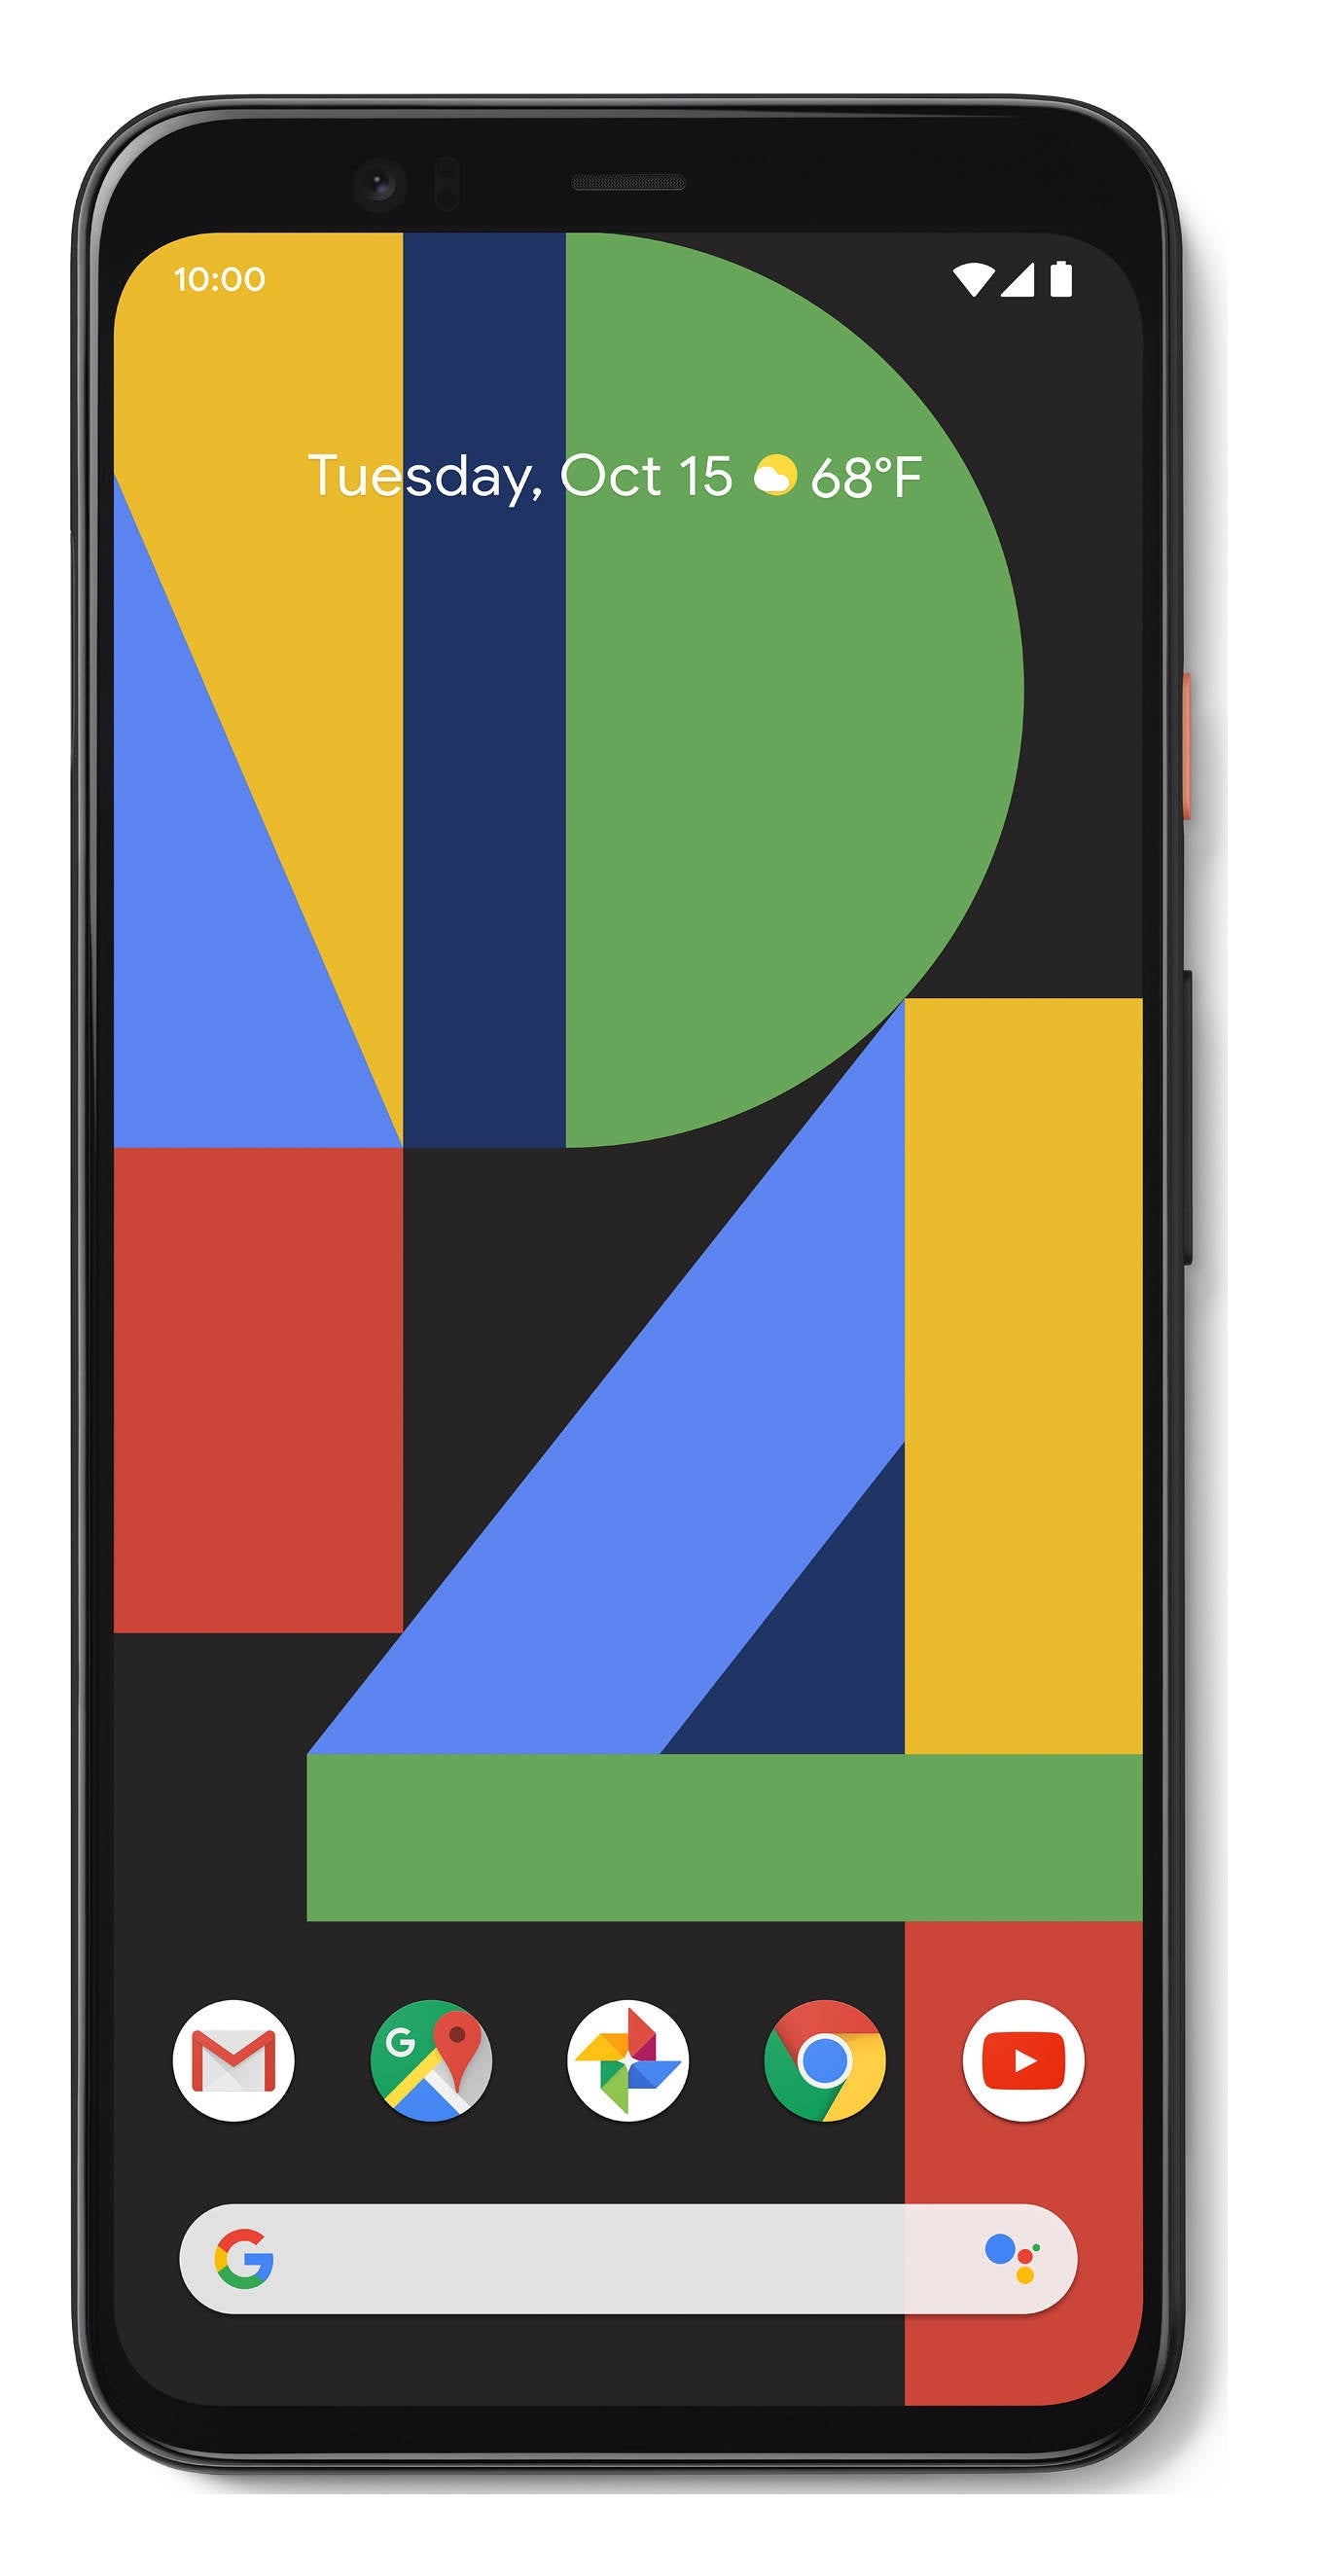 Google Pixel 4 XL Refurbished Mobile Phone